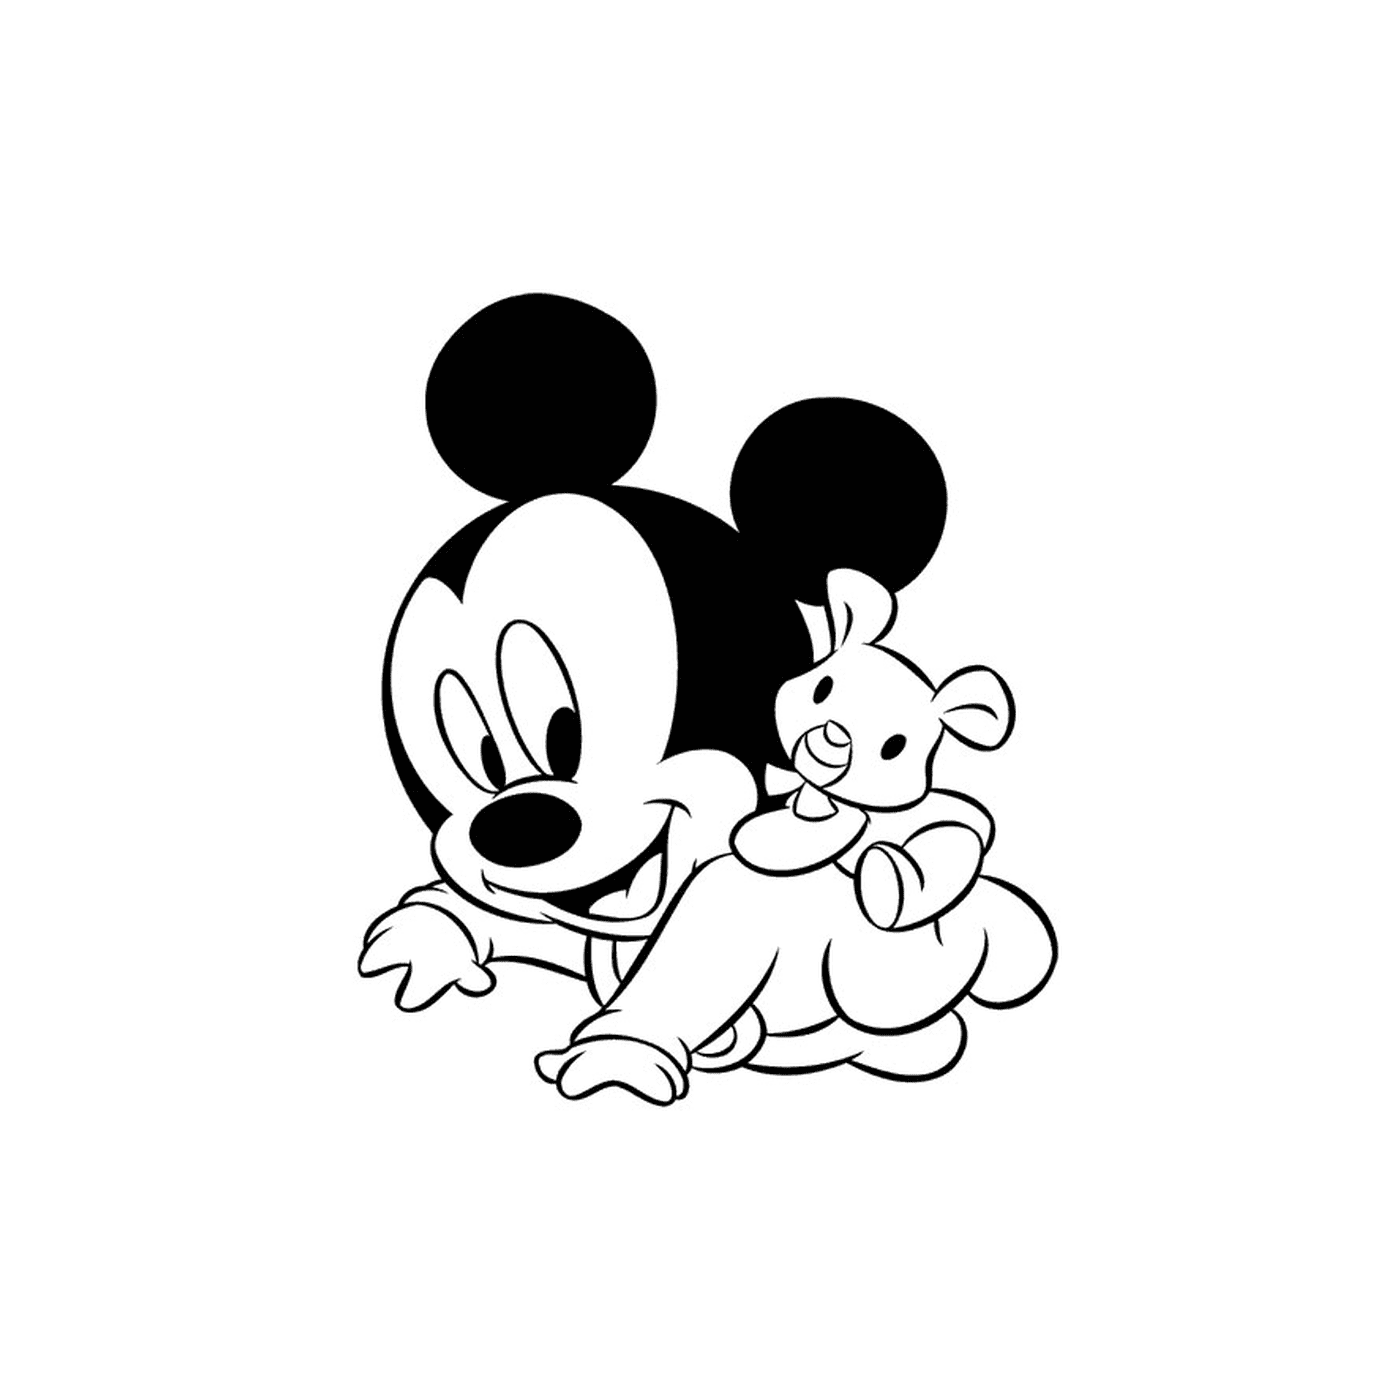  Mickey Mouse bebé sosteniendo un oso de peluche 